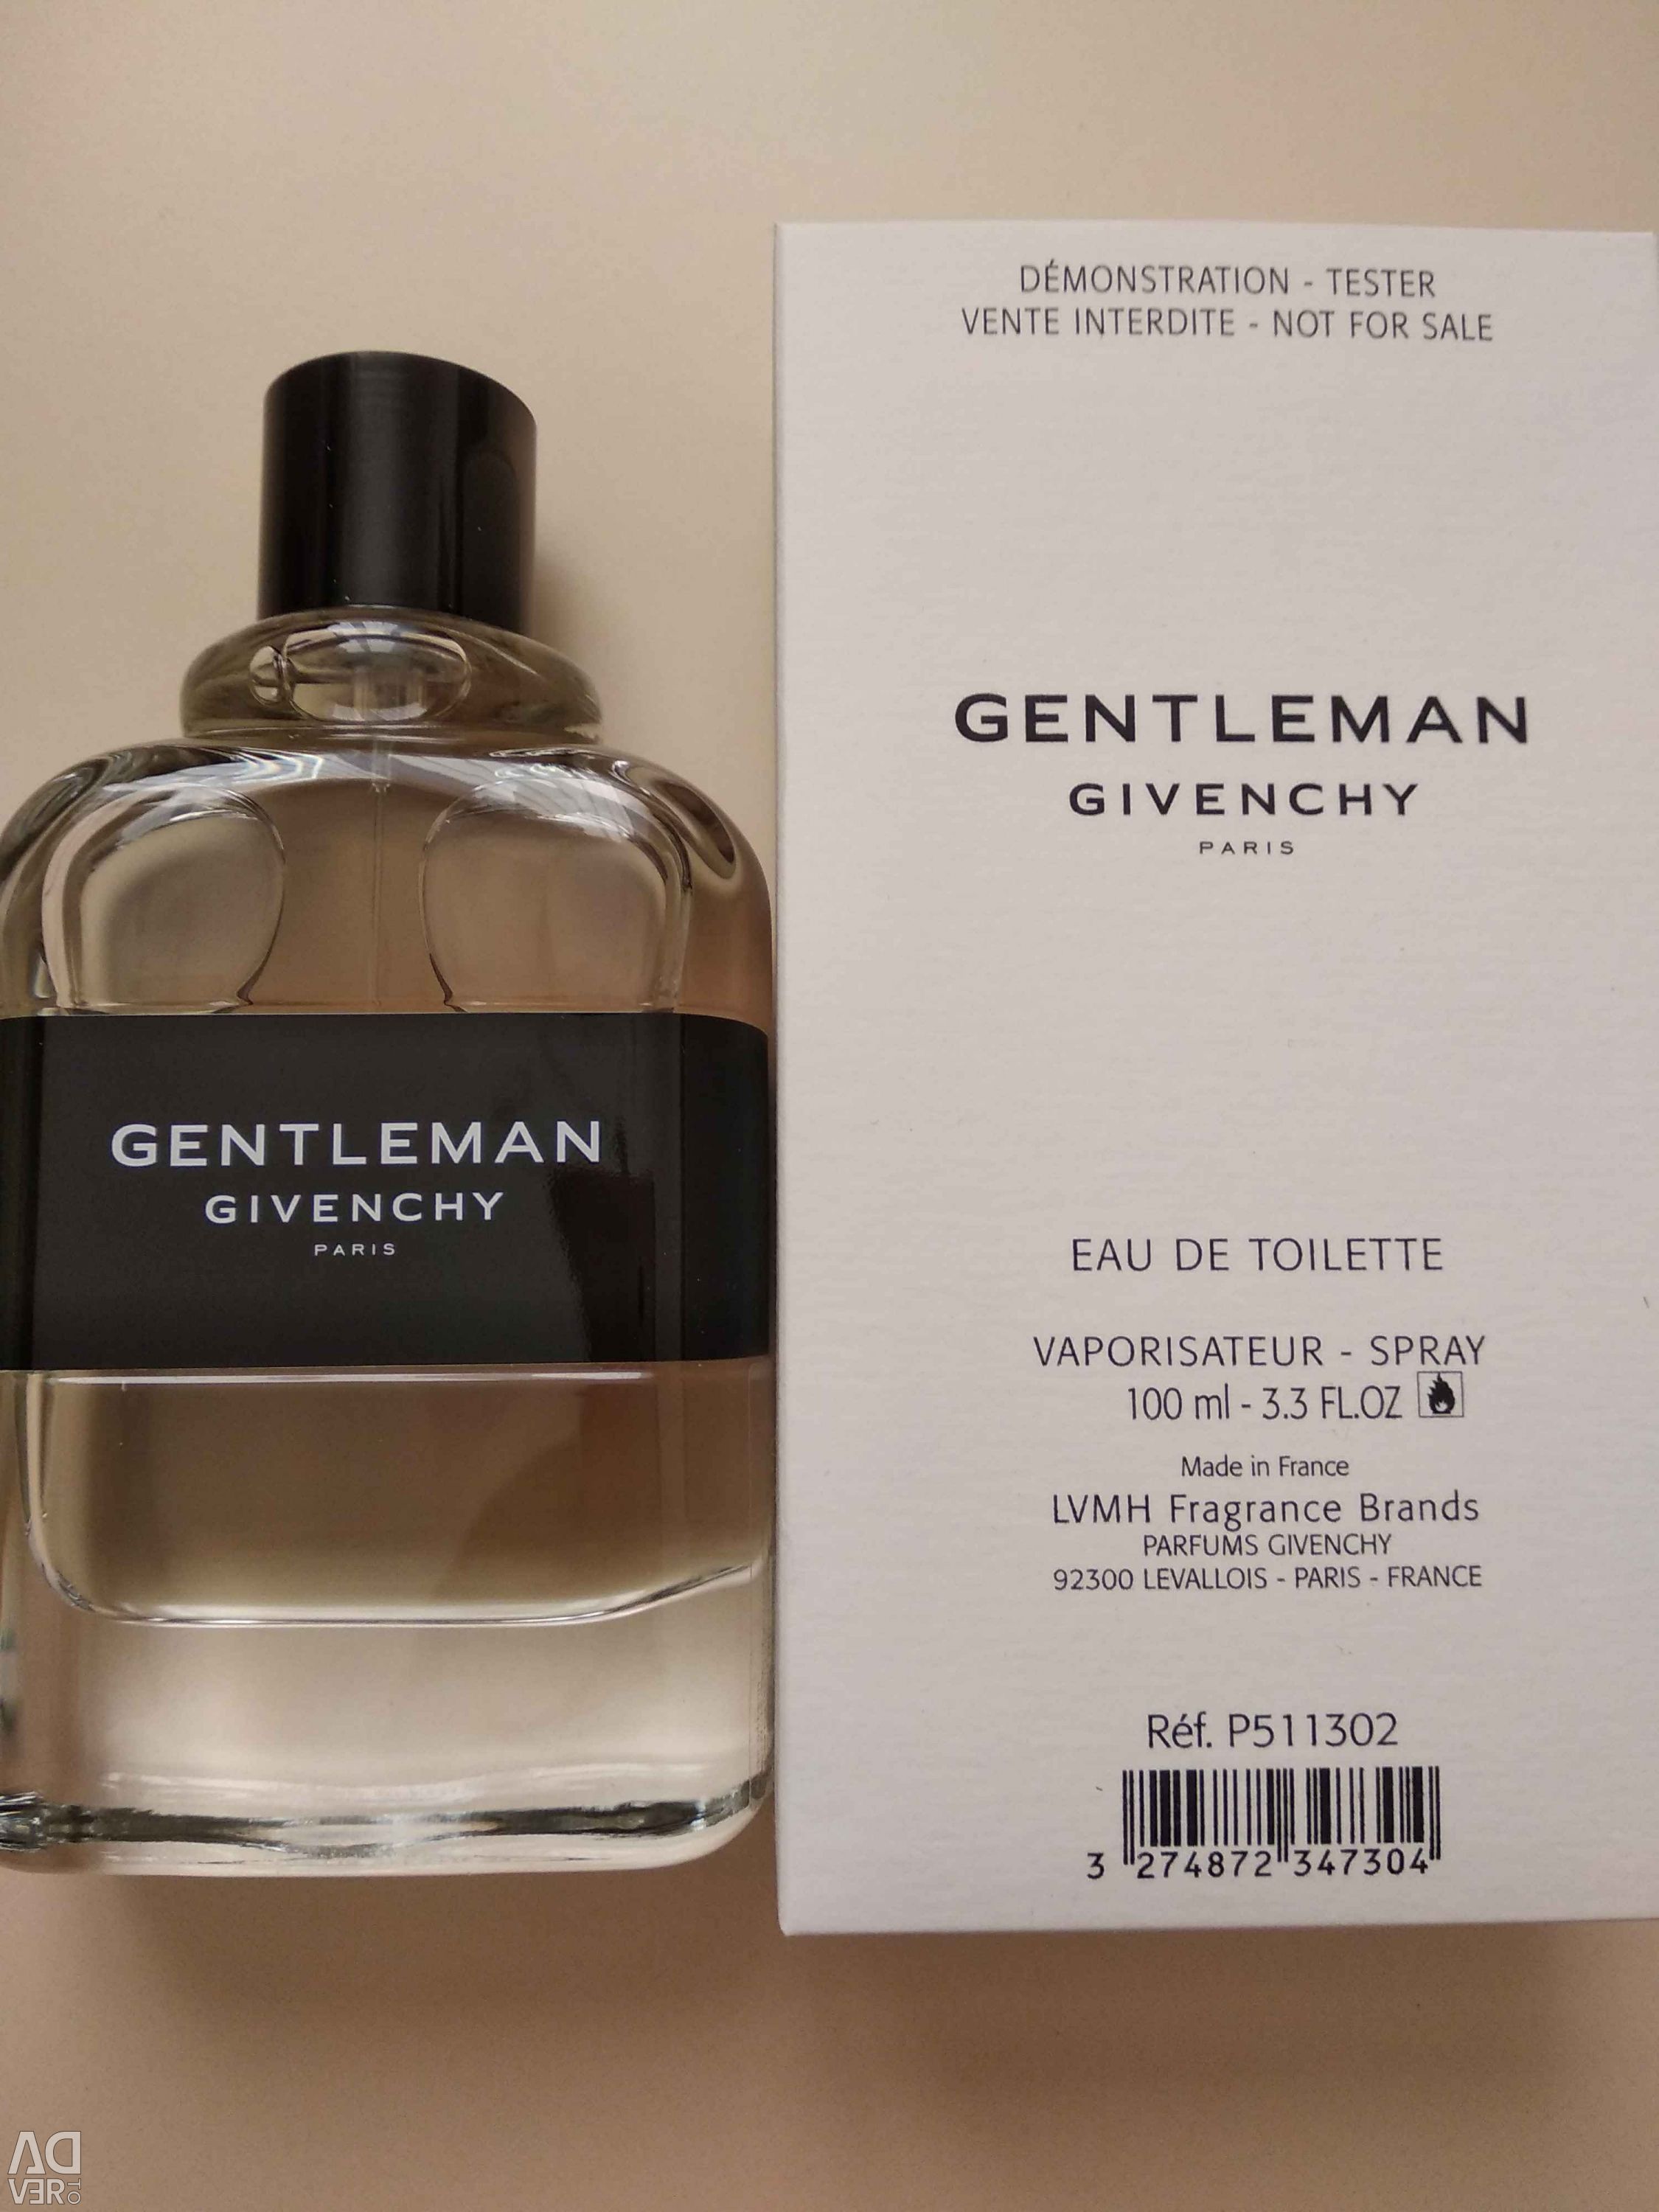 gentleman givenchy paris price